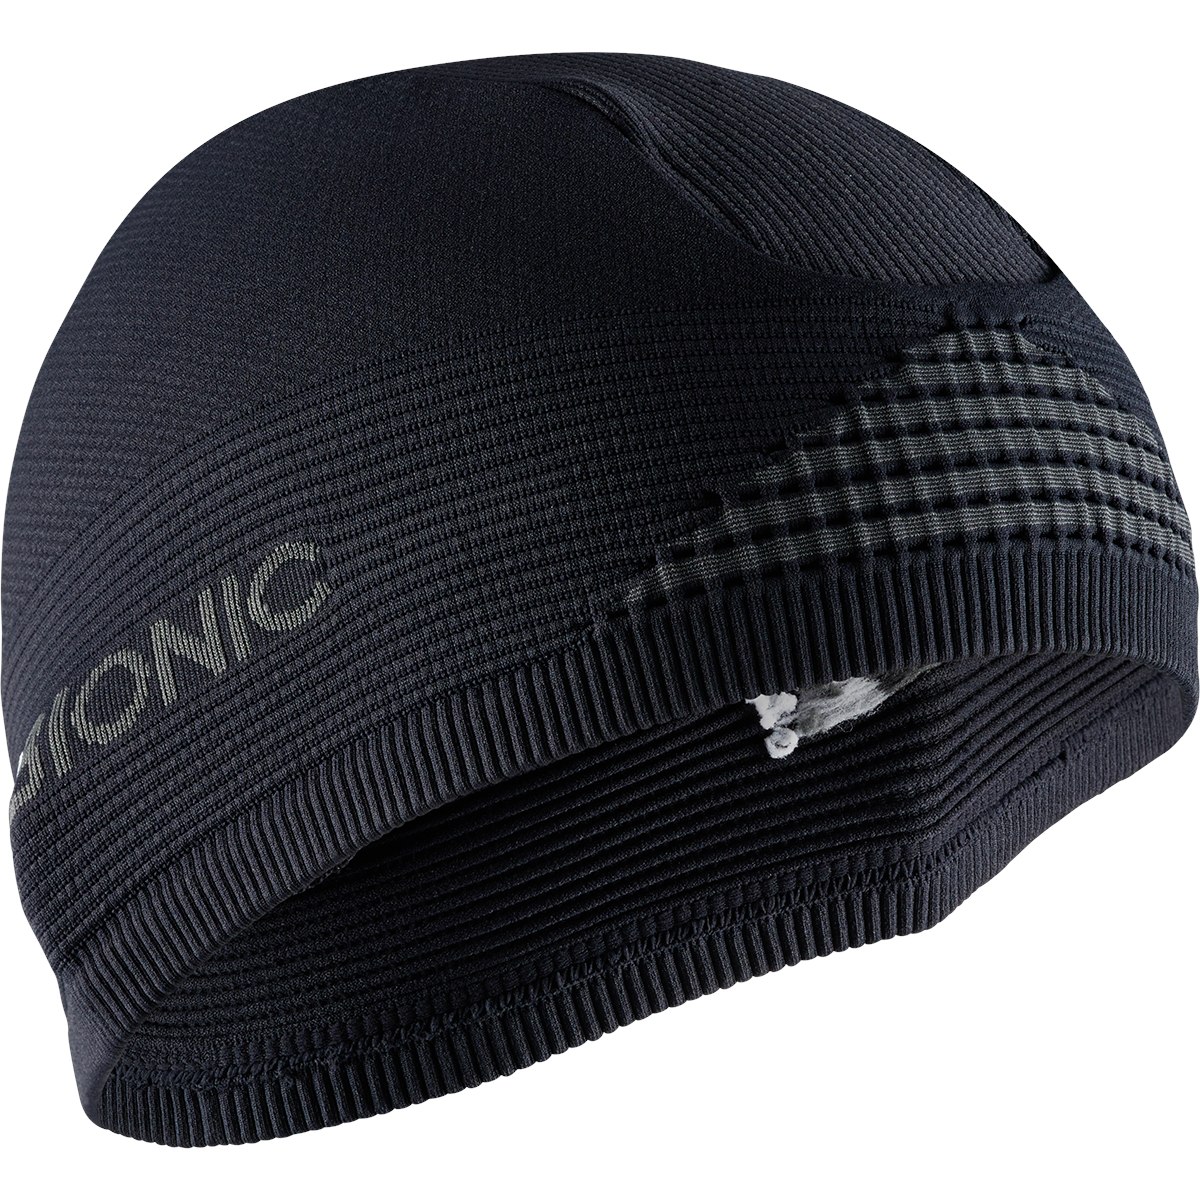 Picture of X-Bionic Helmet Cap - black/charcoal